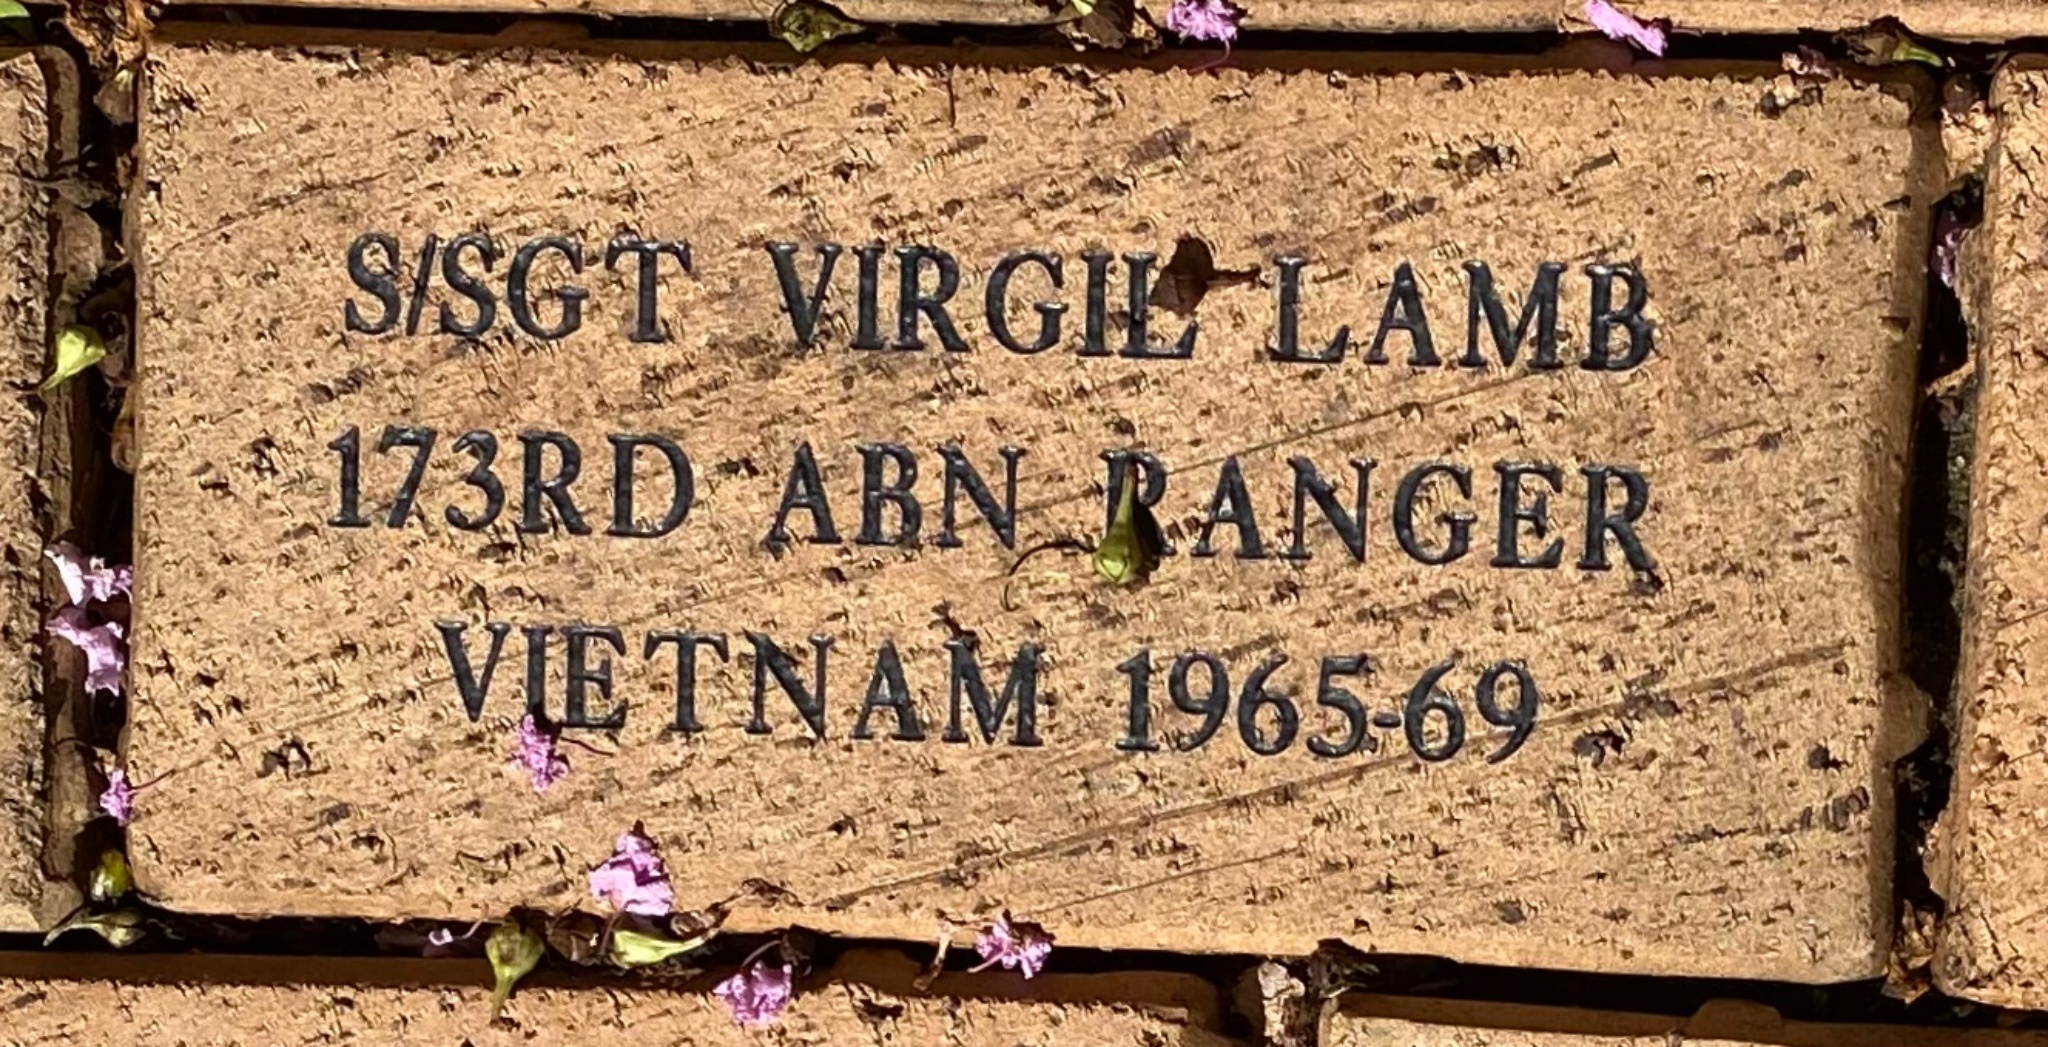 S/SGT VIRGIL LAMB 173RD ABN RANGER VIETNAM 1965-69